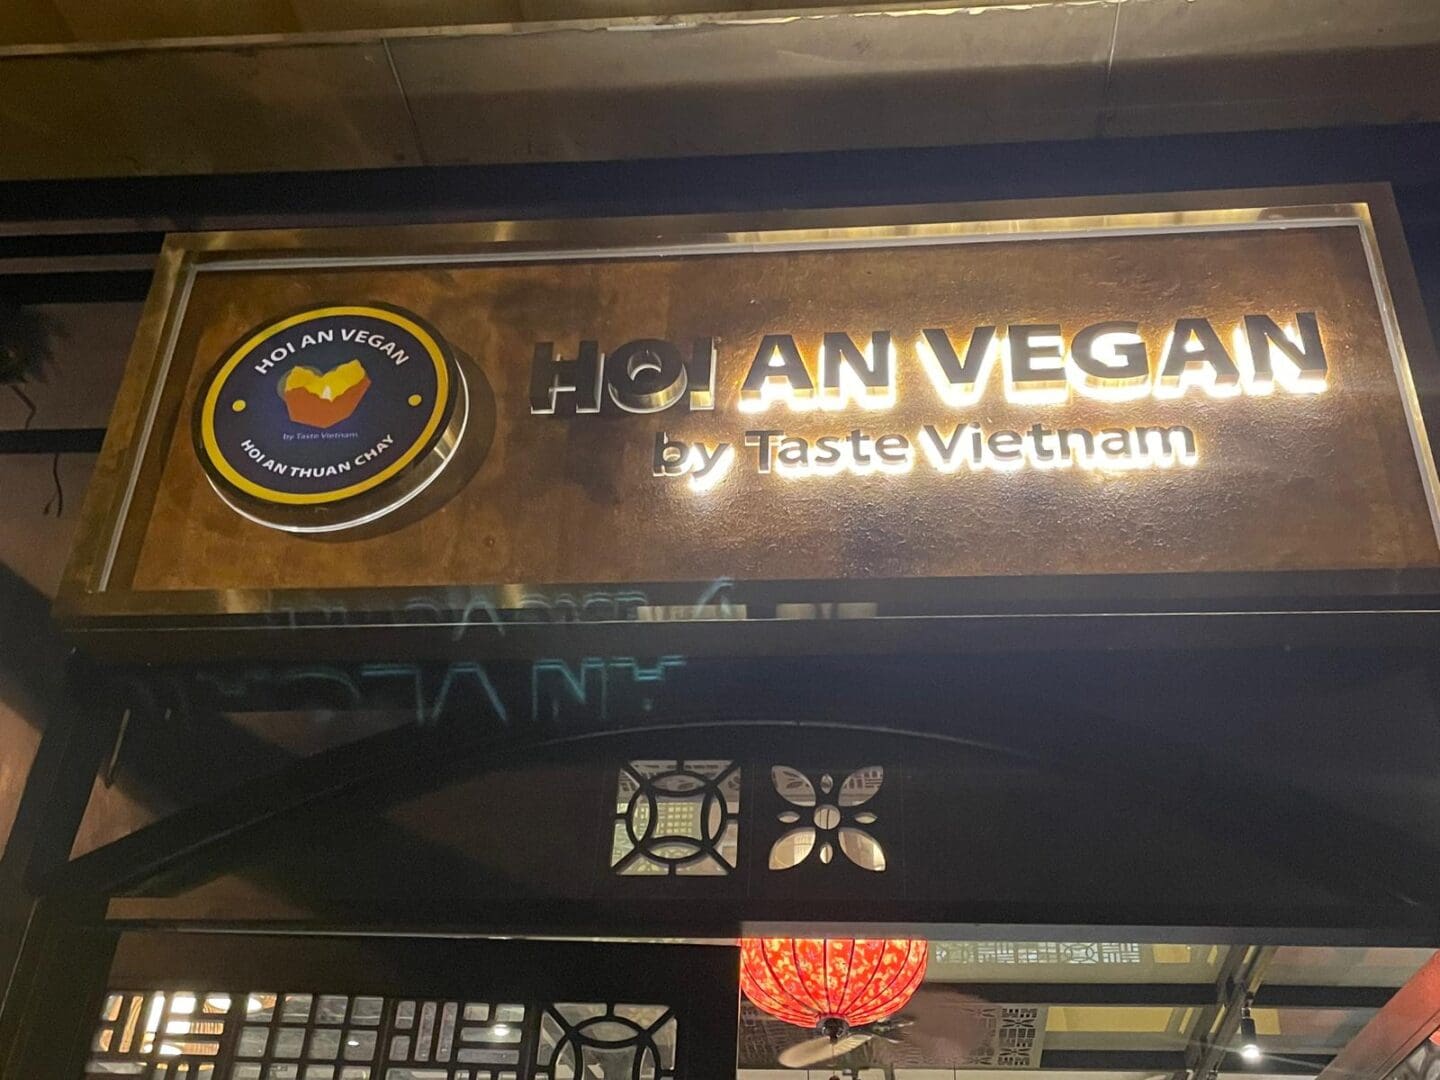 Hoi An Vegan restaurant sign by Taste Vietnam.